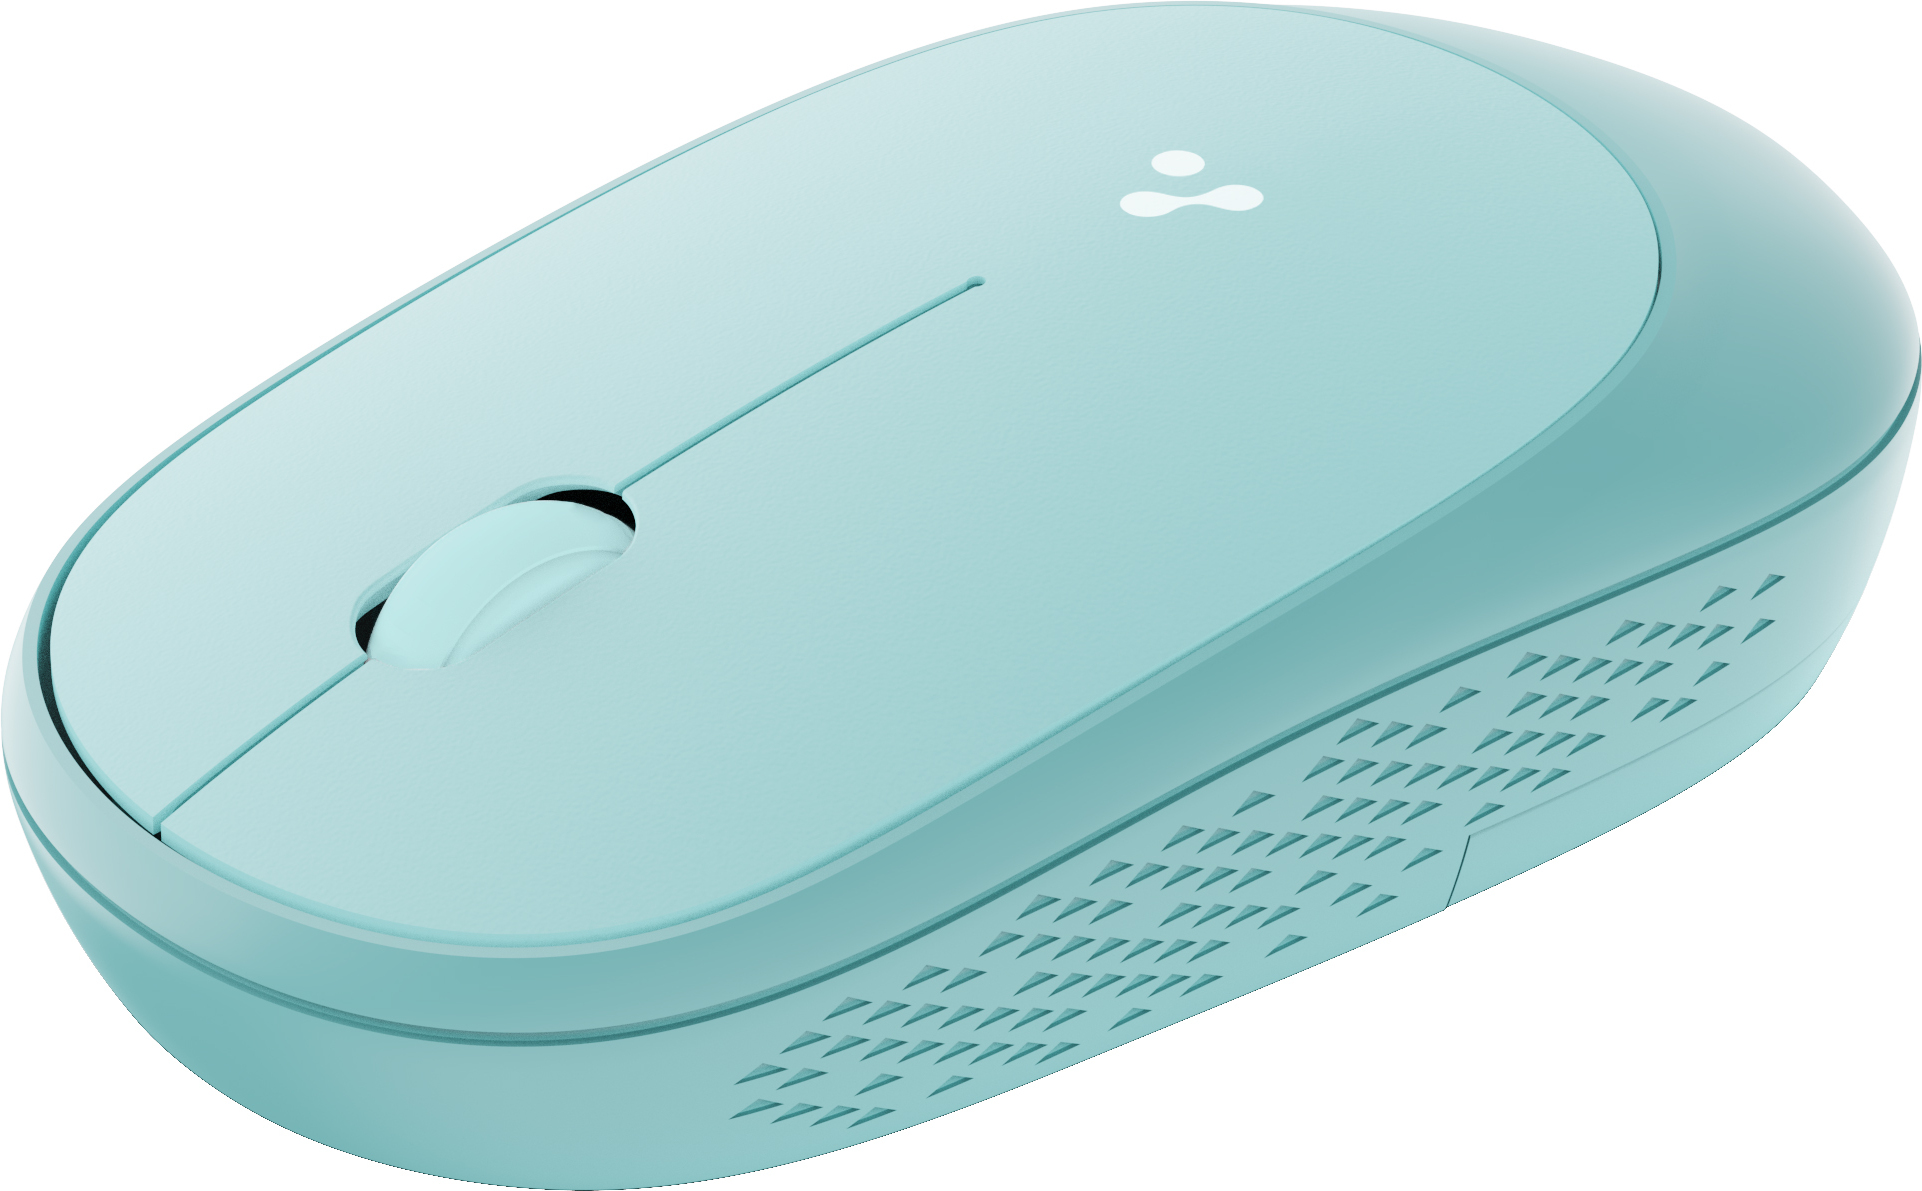 Ambrane Sliq / Silent Clicks, 1200 DPI; Light Weight Wireless Optical Mouse